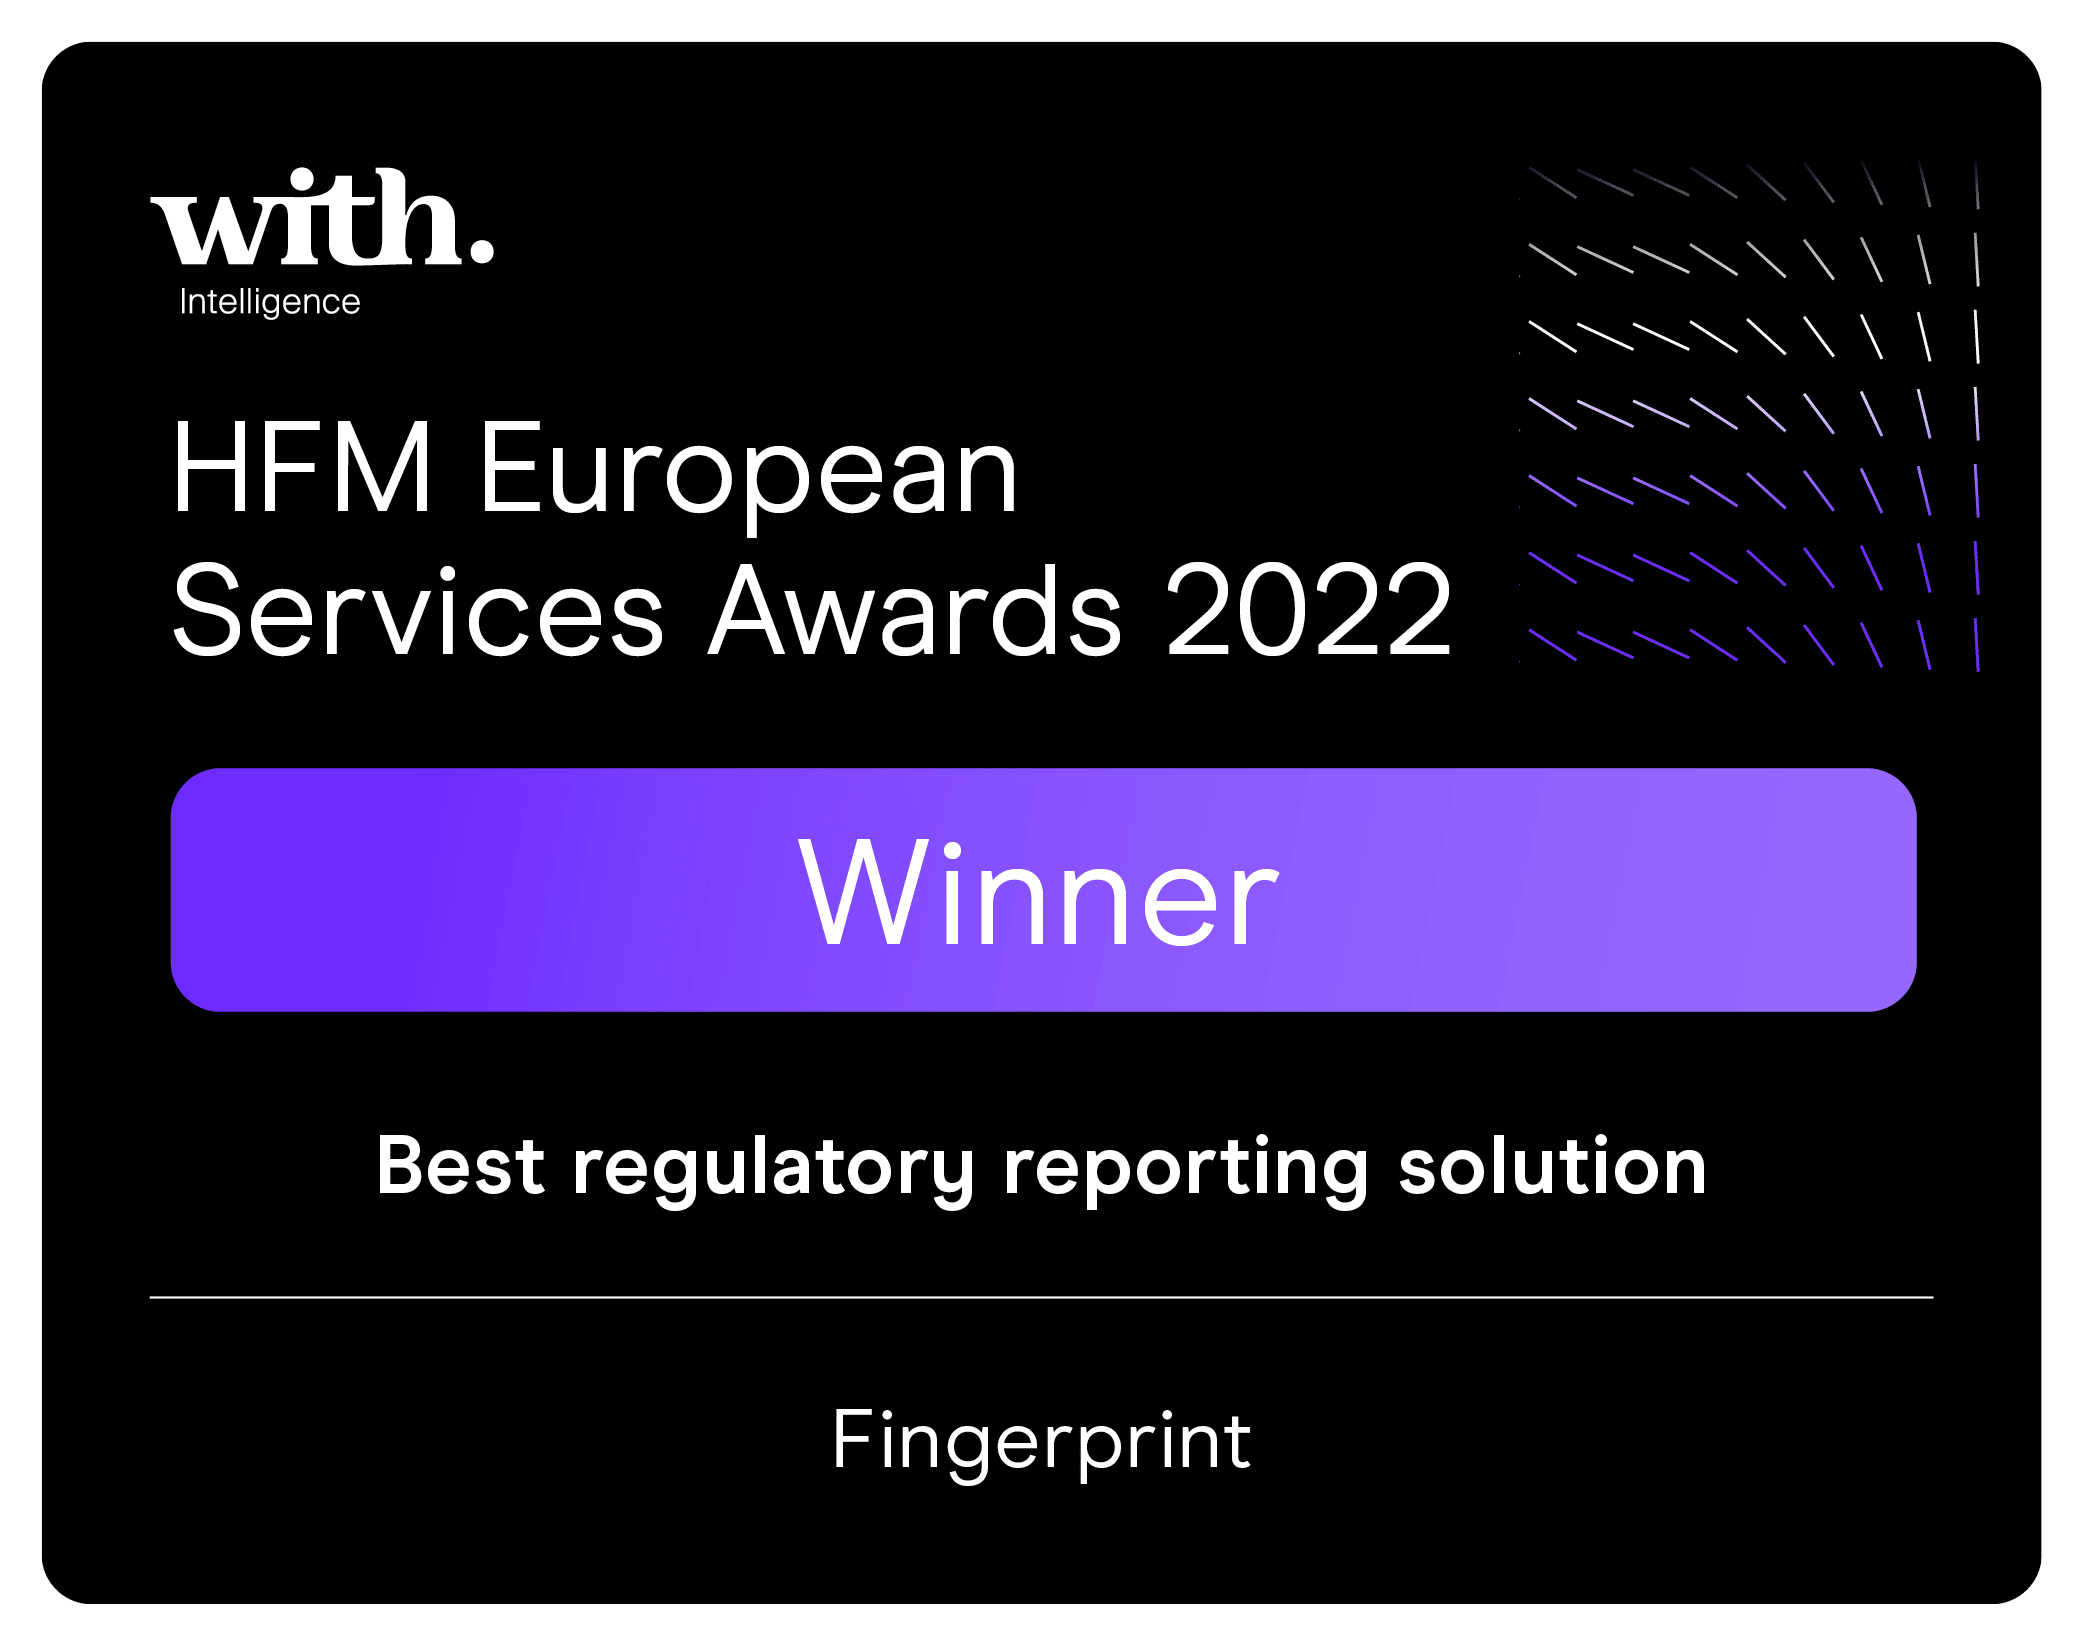 HFM European Services Awards 2022 - Fingerprint - Best Regulatory Reporting Solution